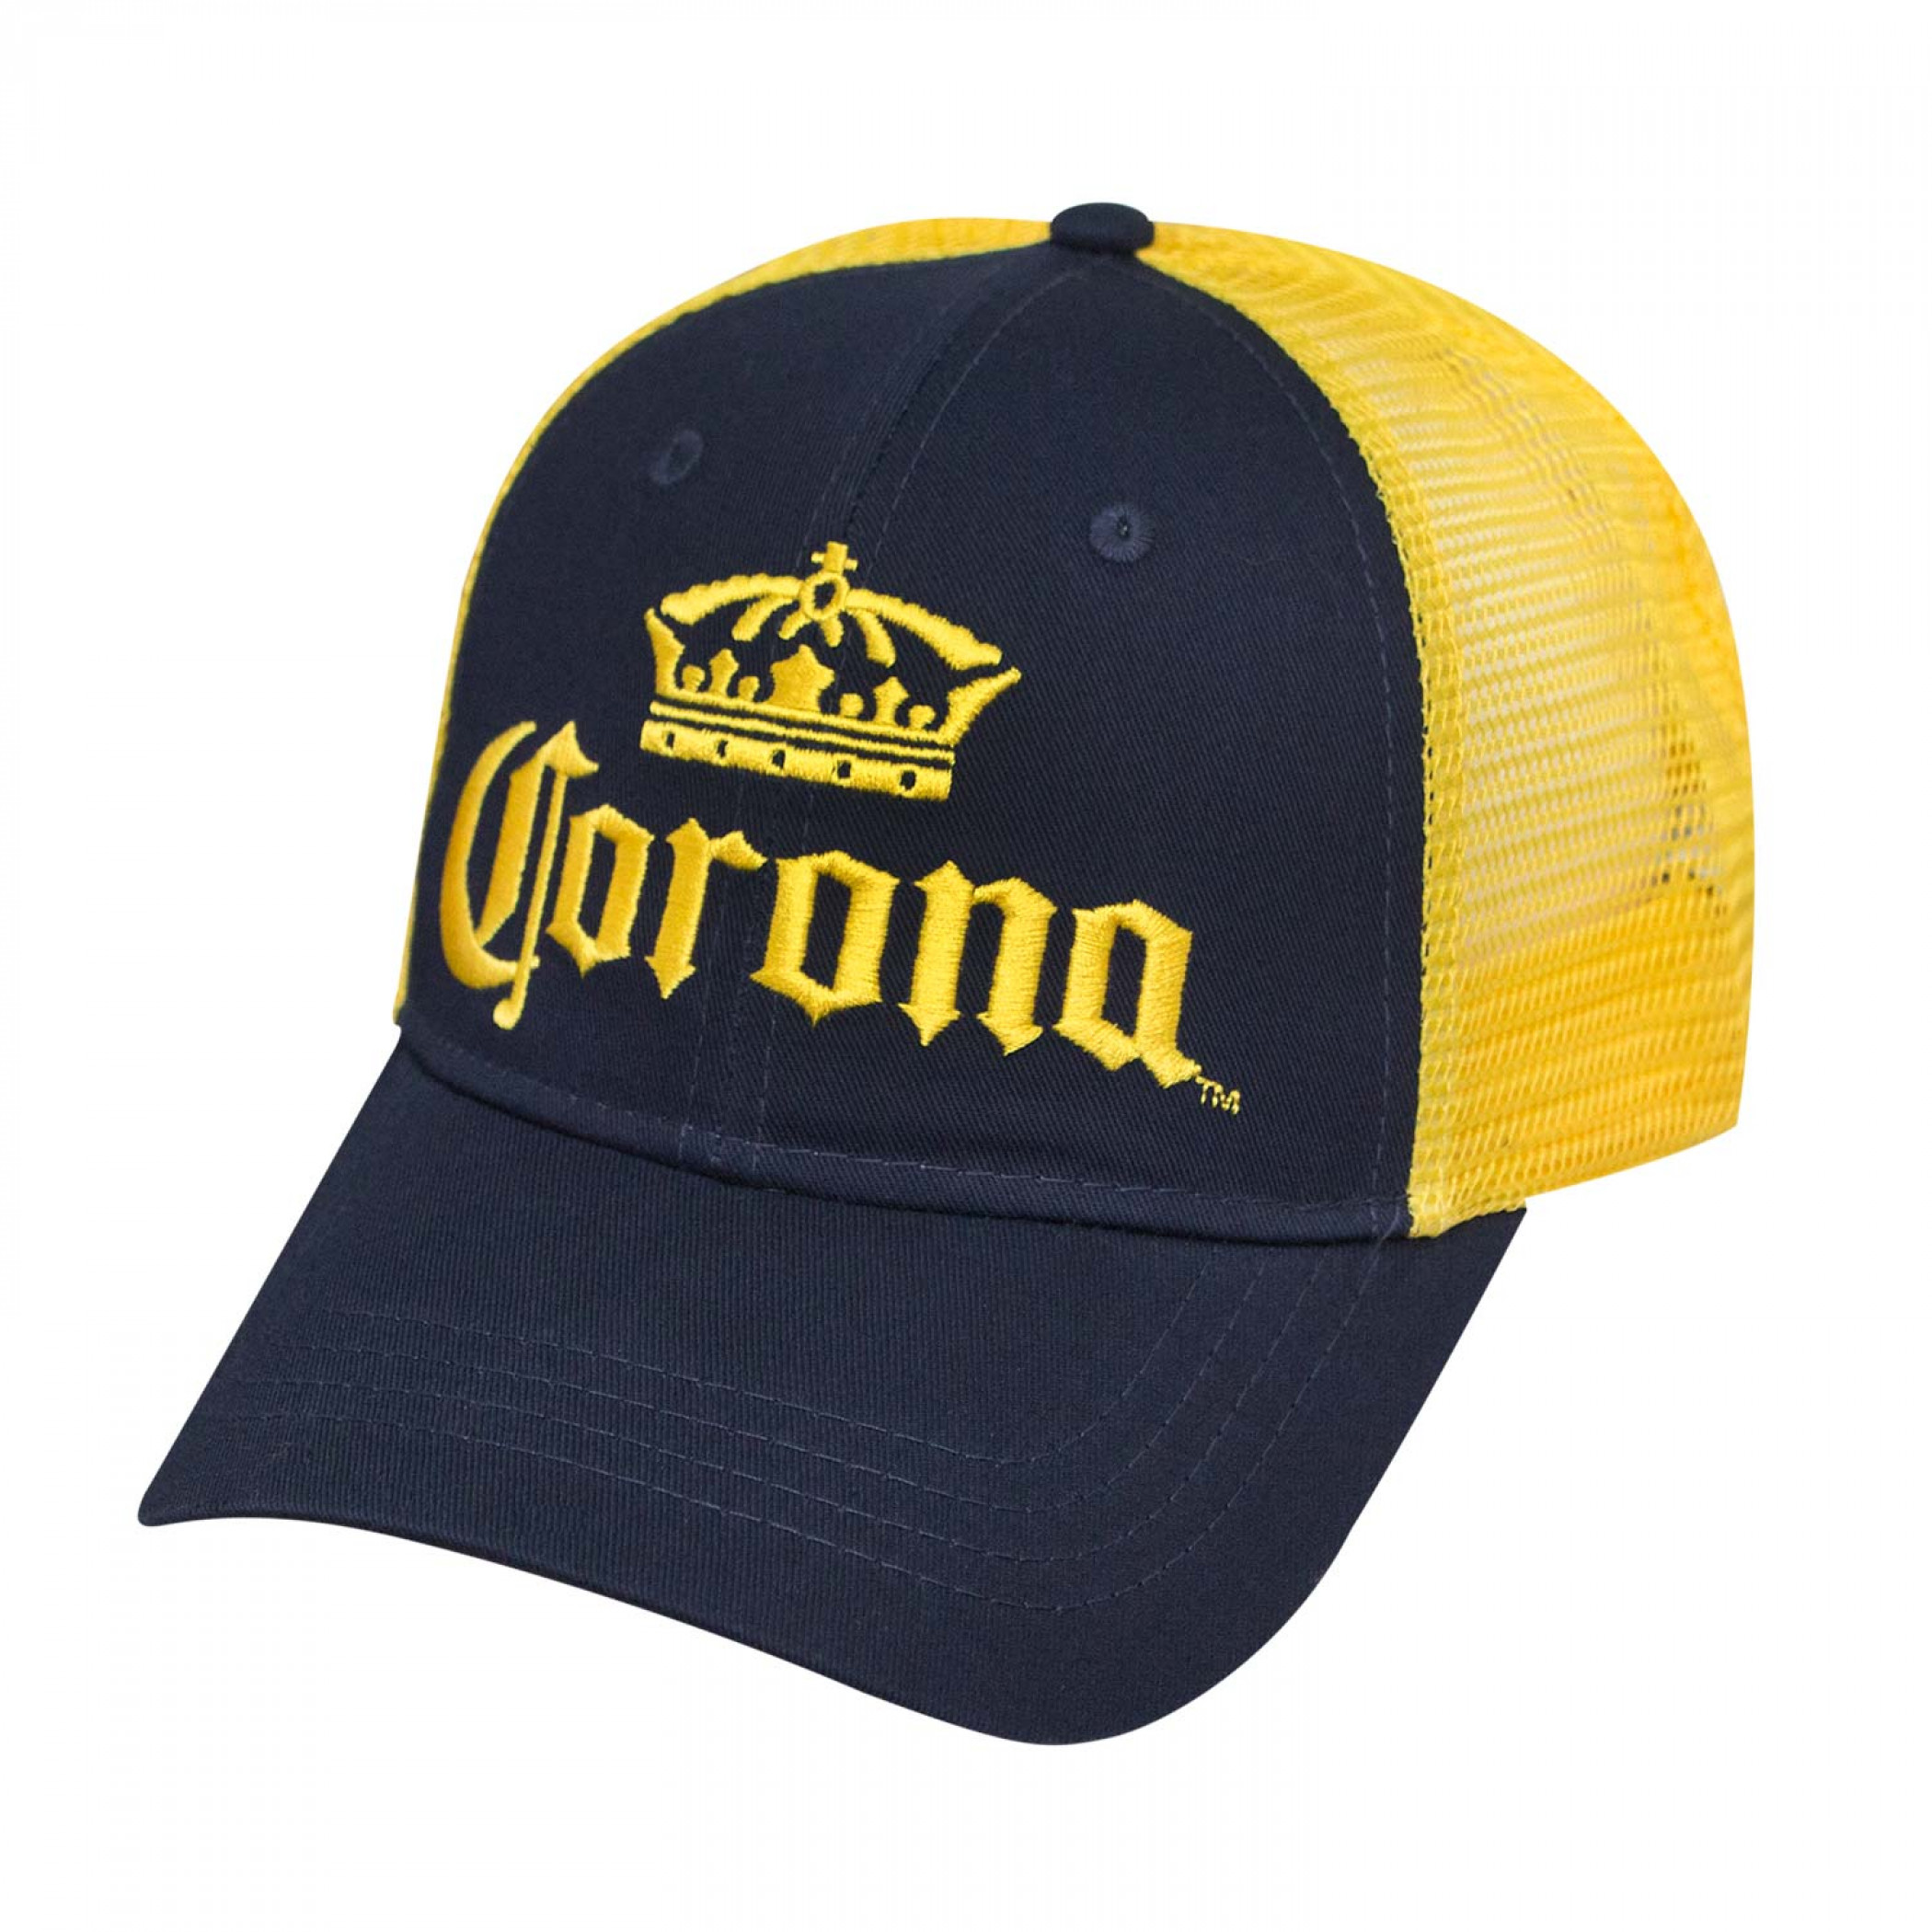 Corona Extra Blue & Yellow Mesh Snapback Hat